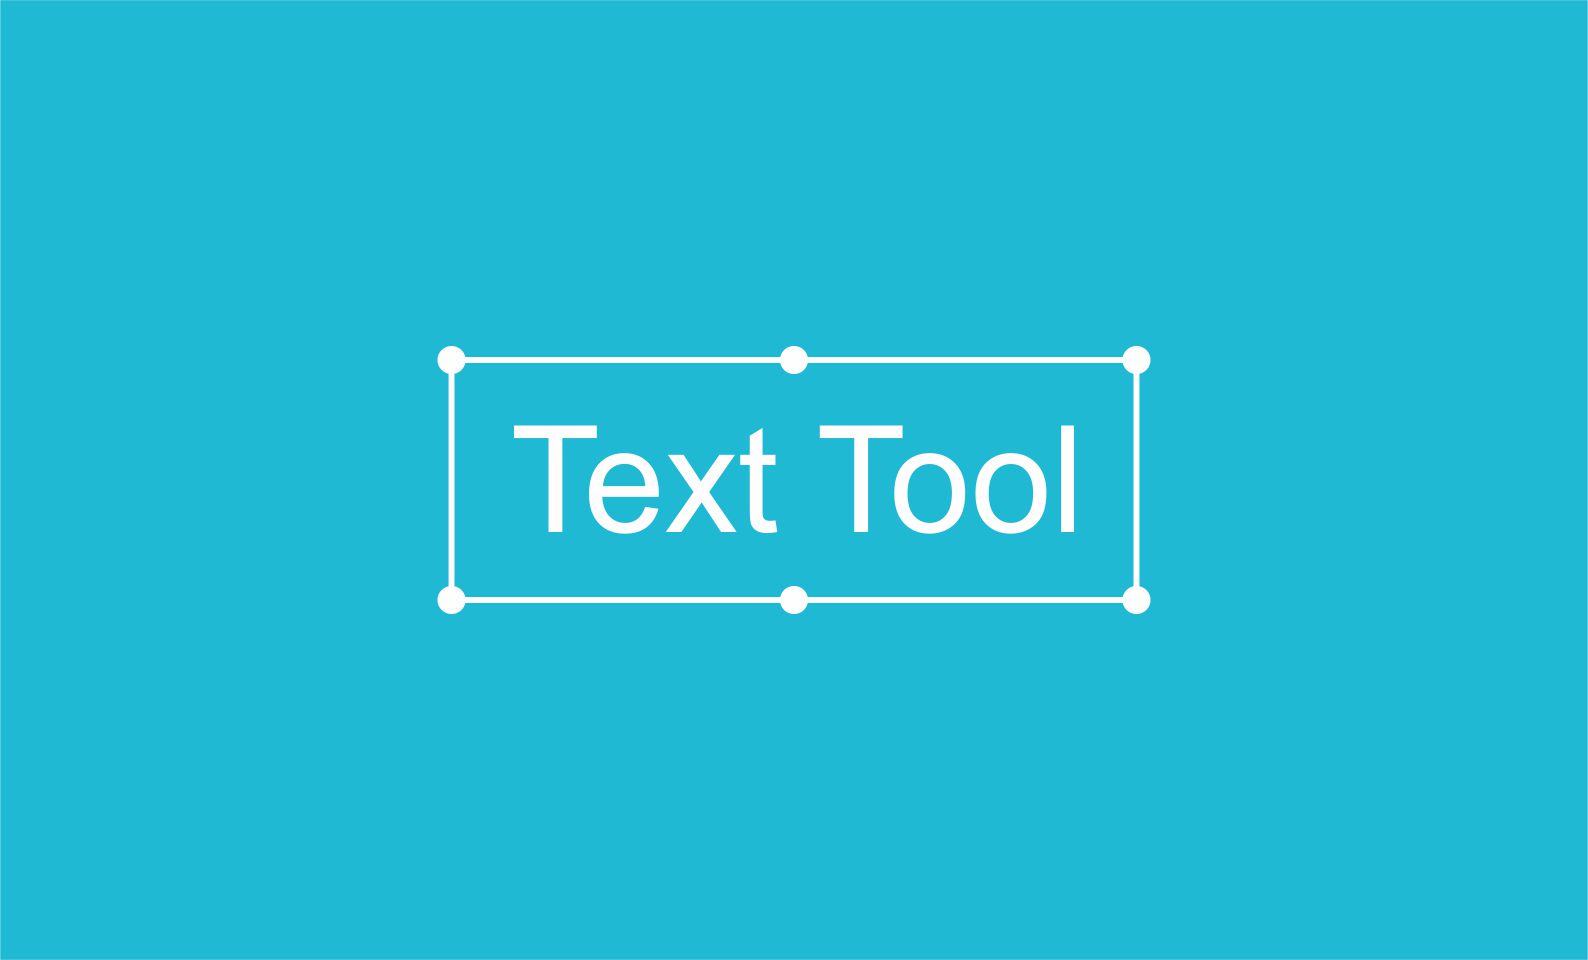 Txt tool